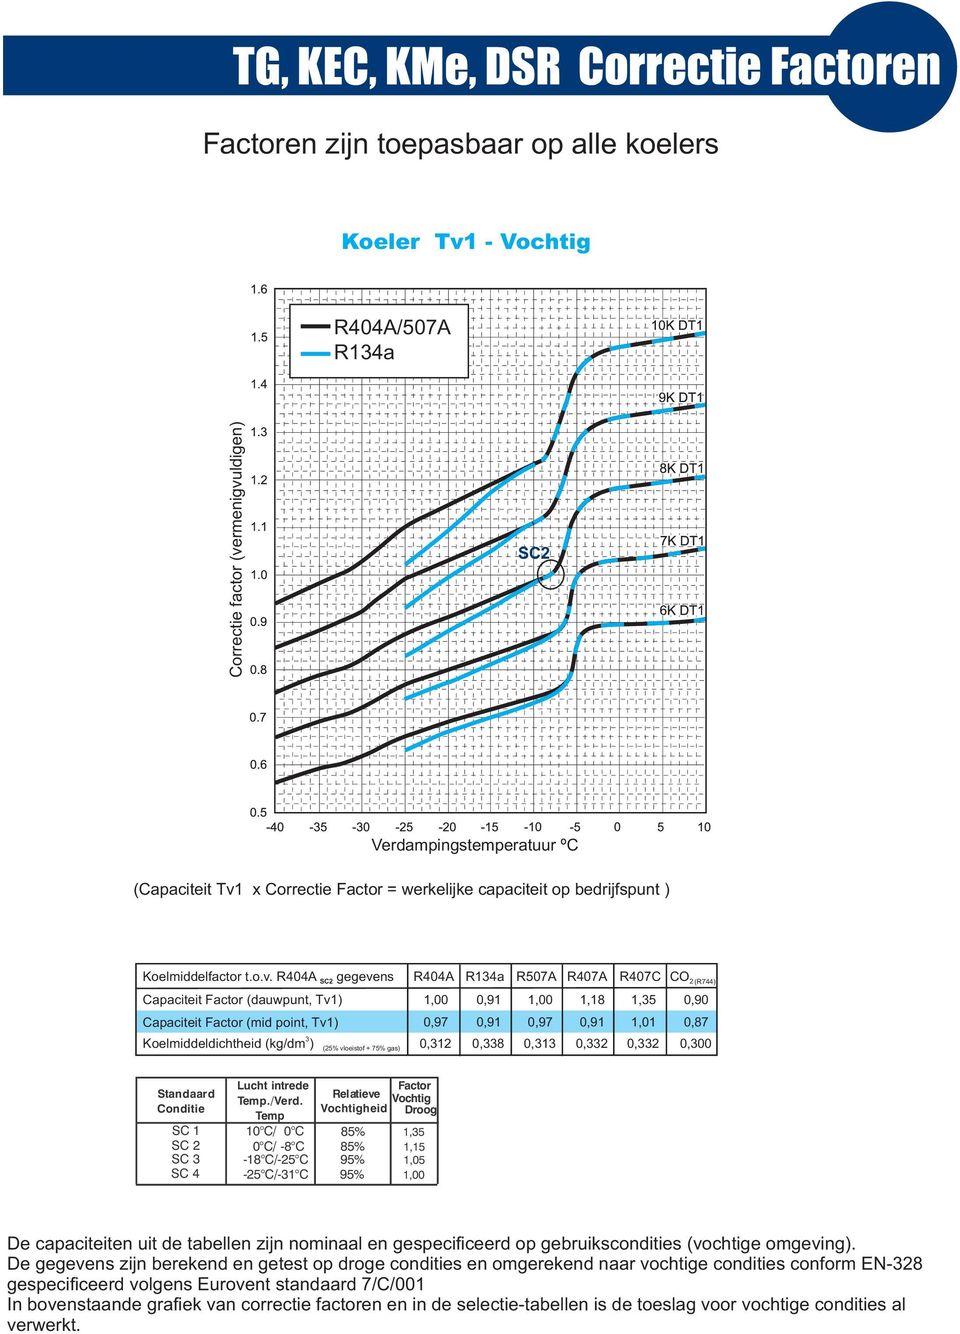 R0A SC Capaciteit Factor (dauwpunt, Tv) Capaciteit Factor (mid point, Tv) gegevens Koelmiddeldichtheid (kg/dm ) (5% vloeistof + 75% gas) R0A Ra R507A R07A R07C,00 0,9,00,8,5 0,97 0,9 0,97 0,9,0 0,